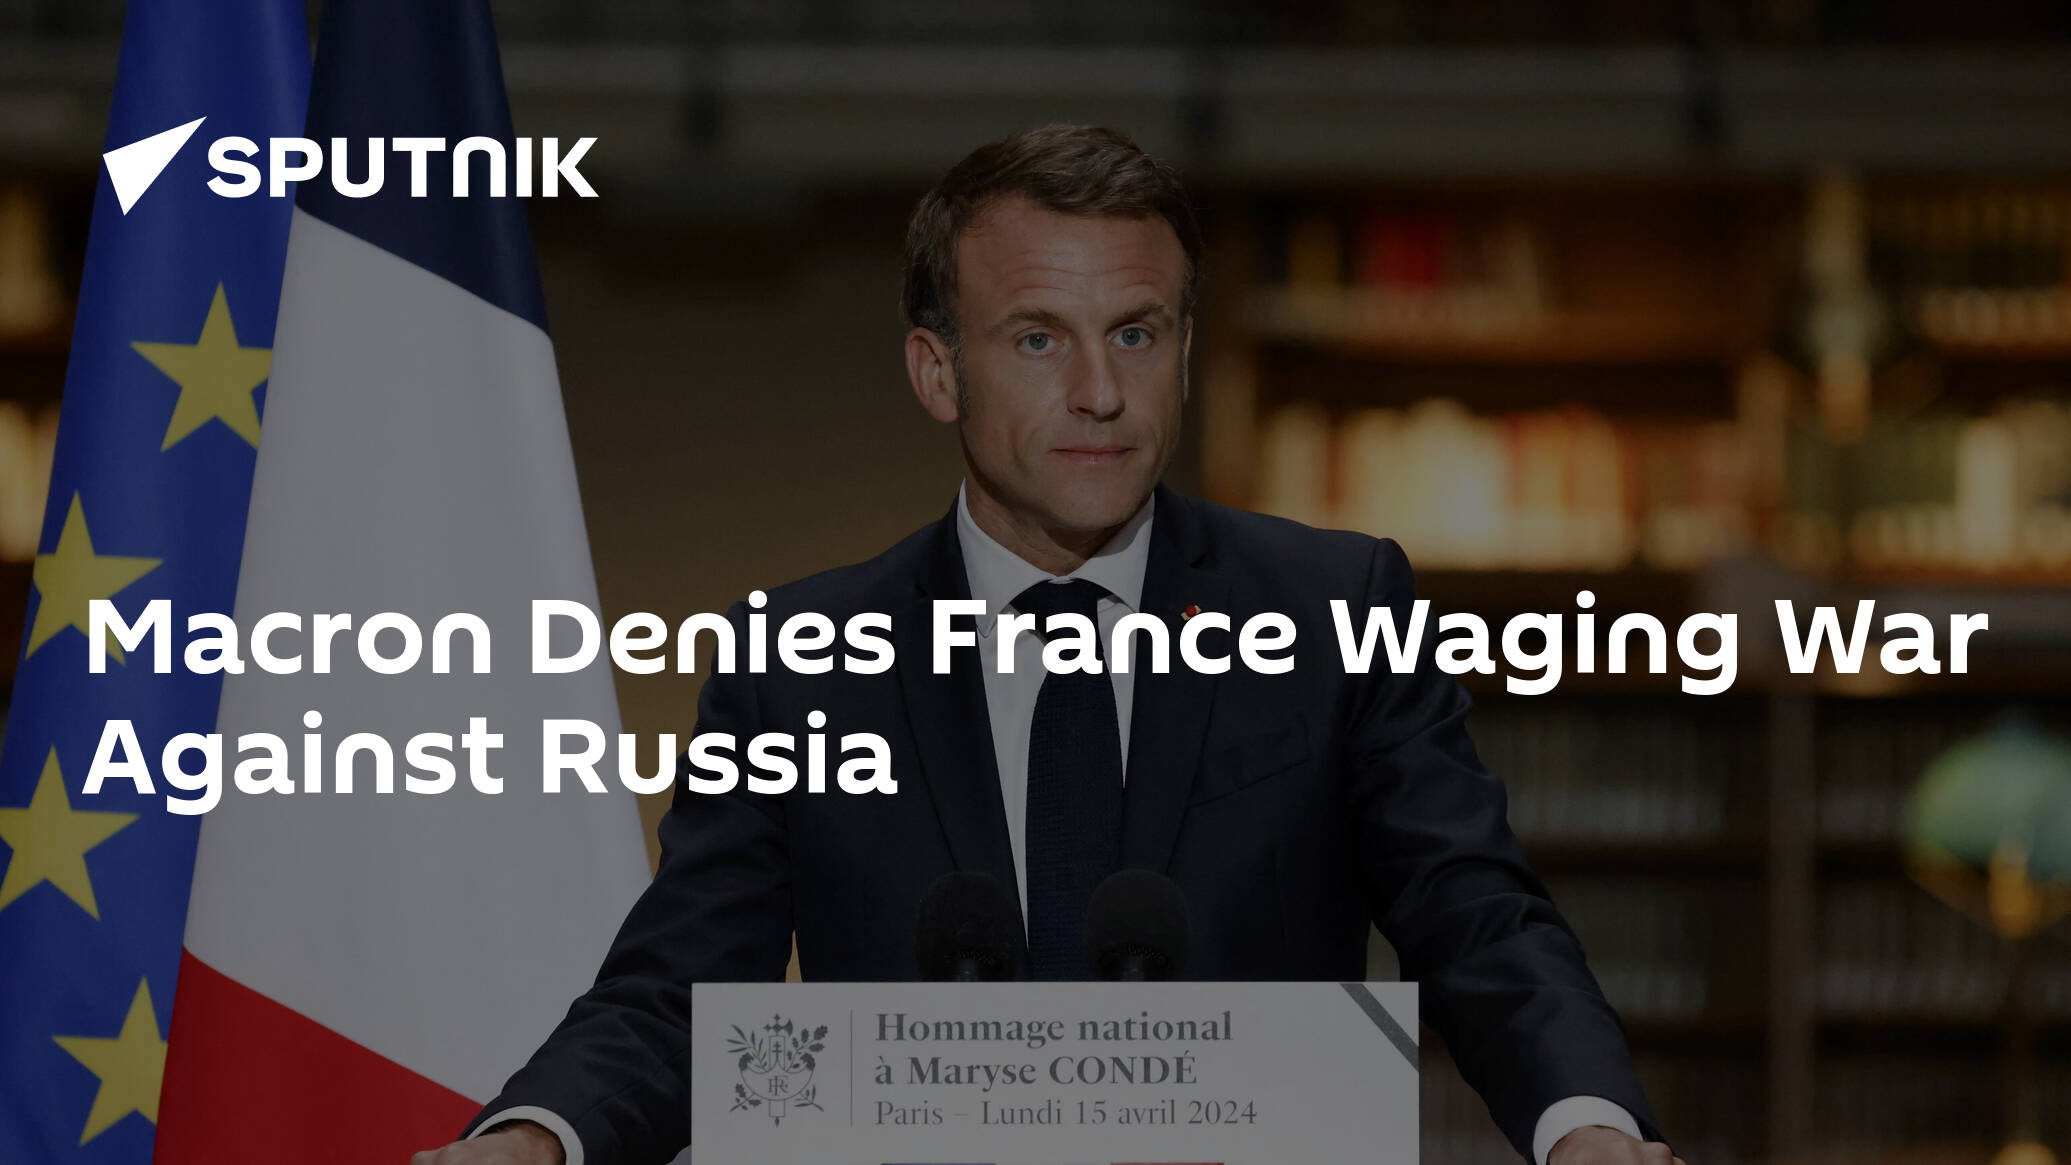 Macron Denies France Waging War Against Russia